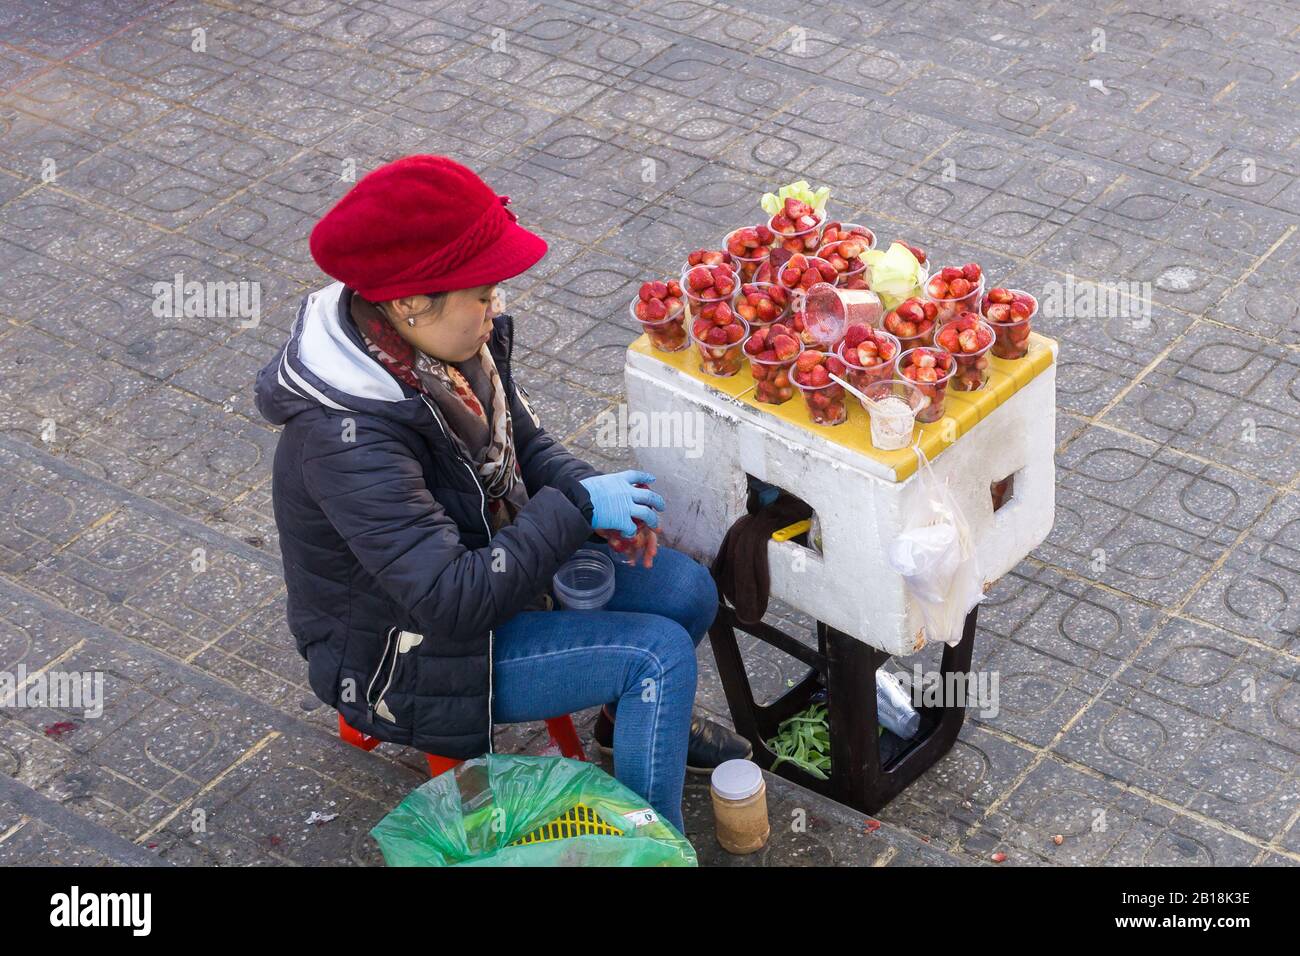 Dalat strawberries - A woman street vendor selling strawberries in Dalat, Vietnam, Southeast Asia. Stock Photo